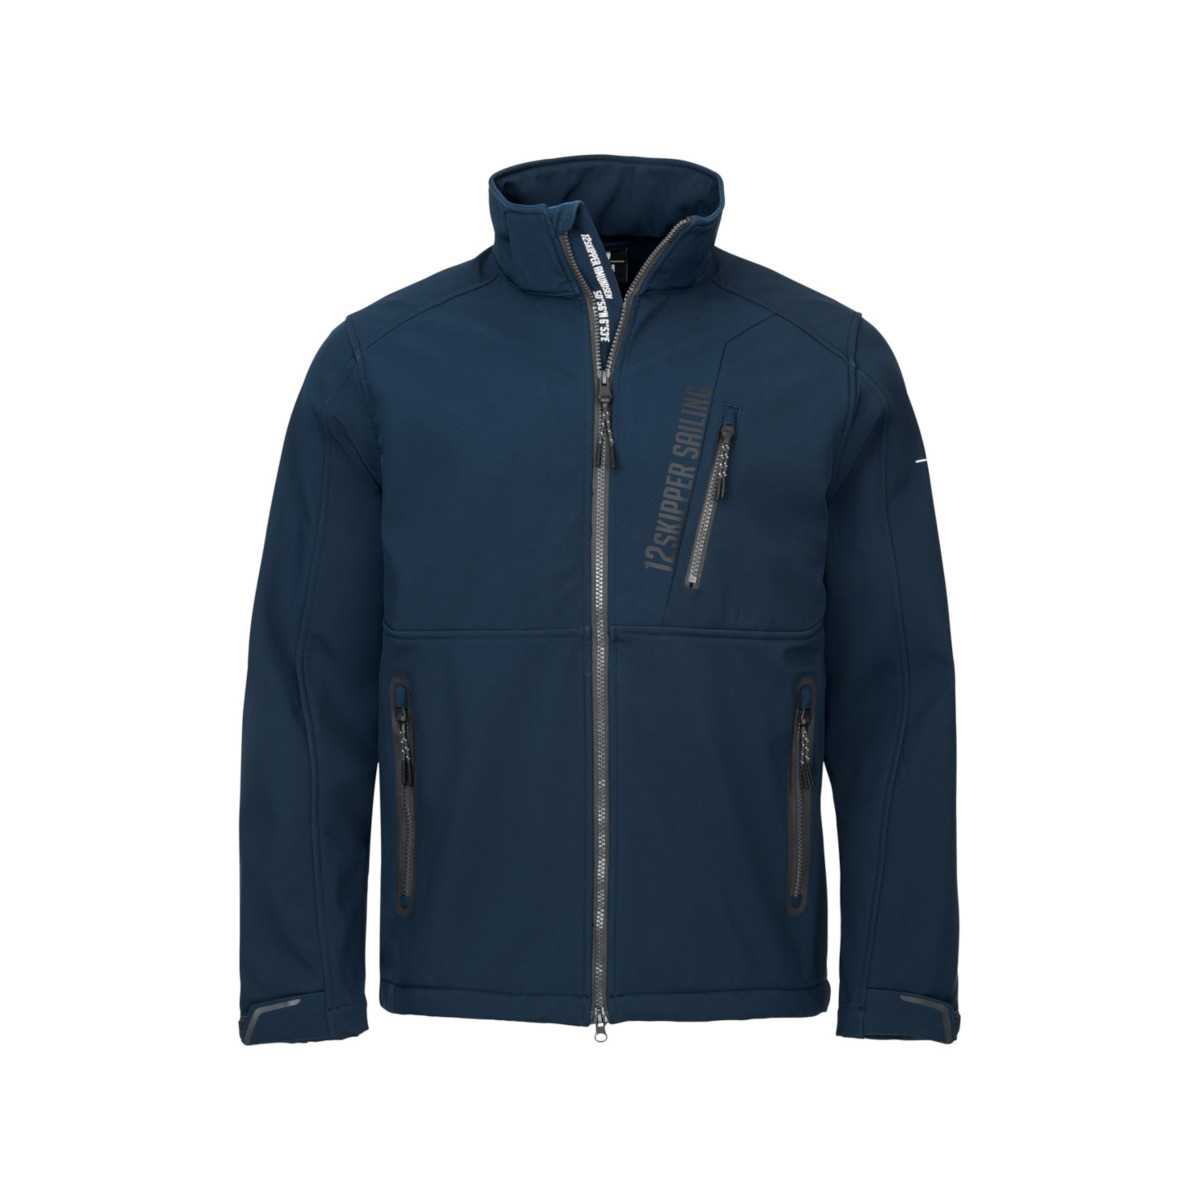 DEAL: 12skipper Amundsen Softshell giacca blu navy